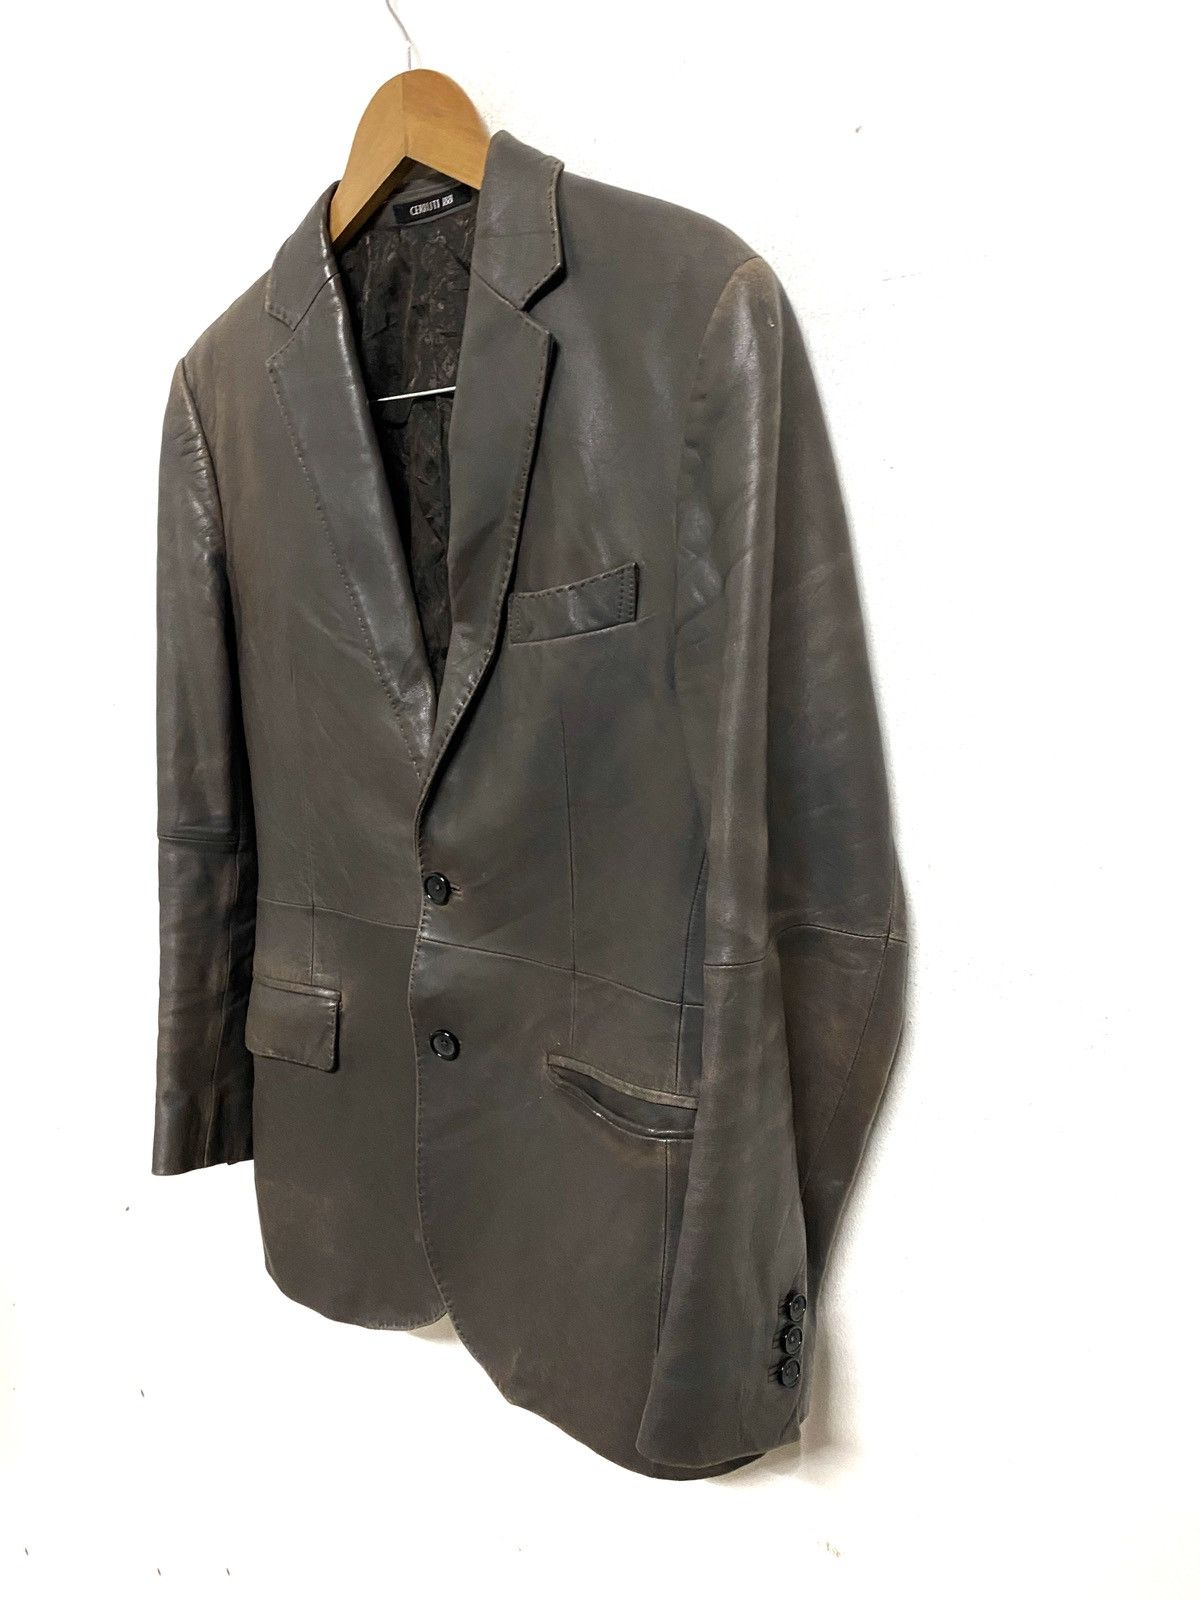 Cerruti 1881 Lambskin Leather Jacket - 3